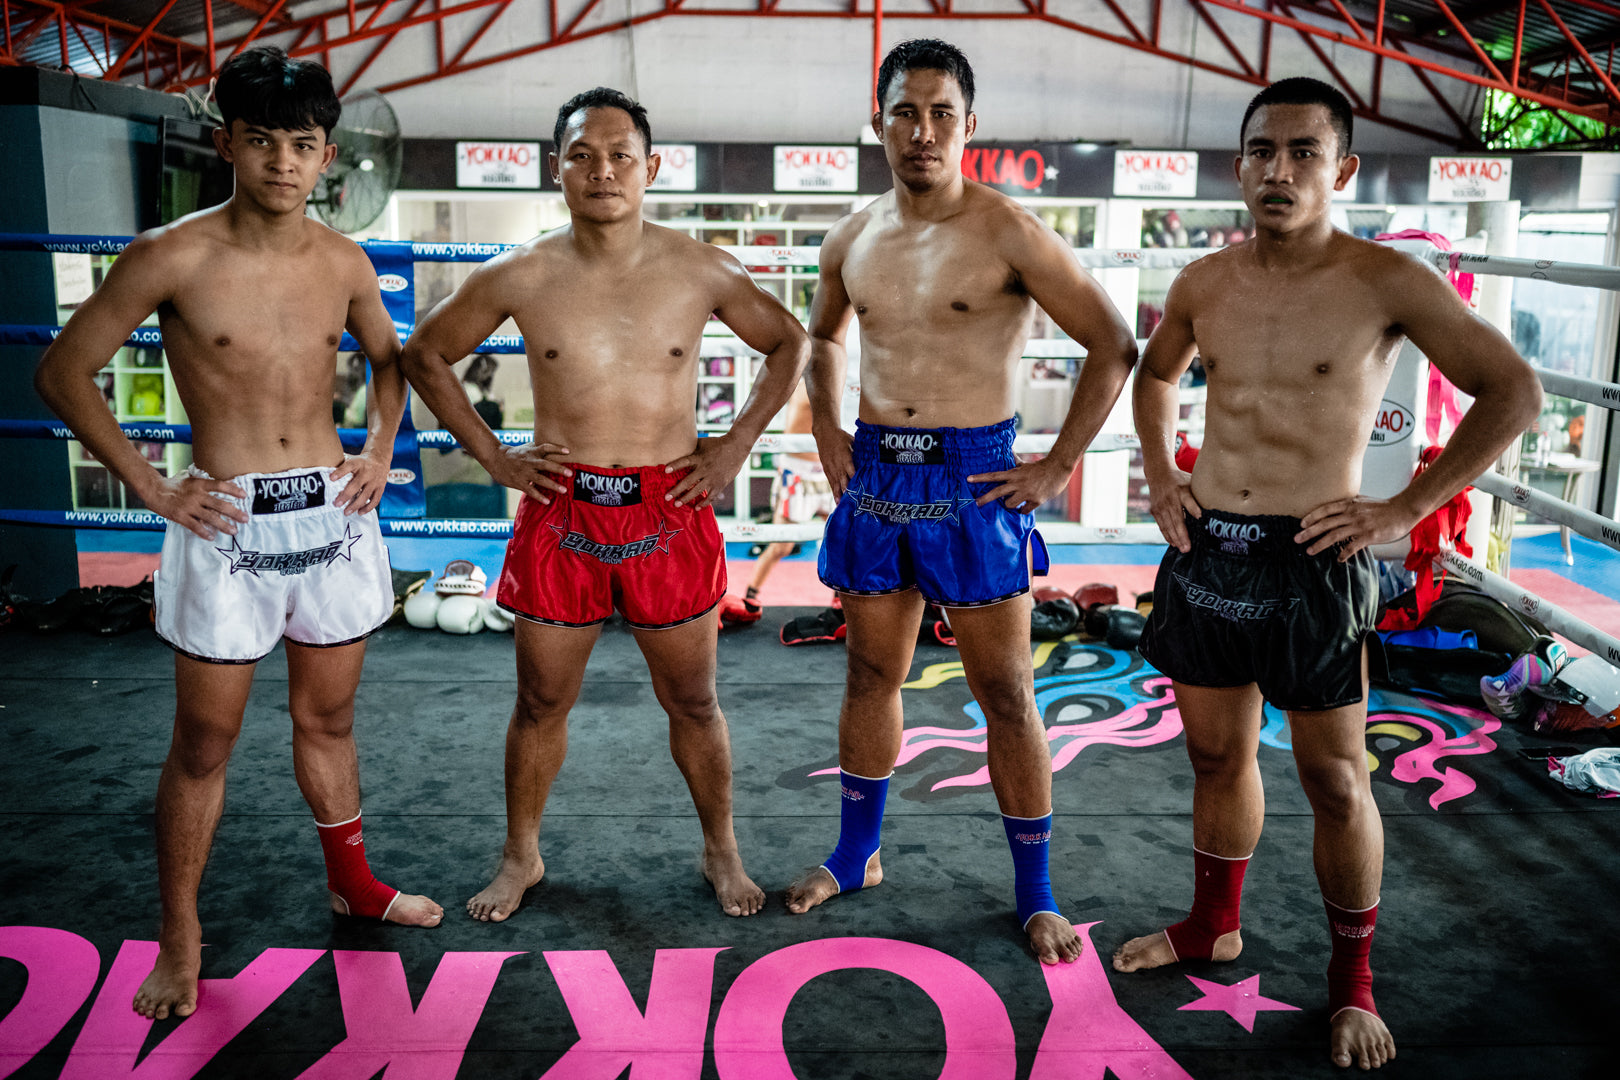 History of Muay Thai - Kombat Group Thailand